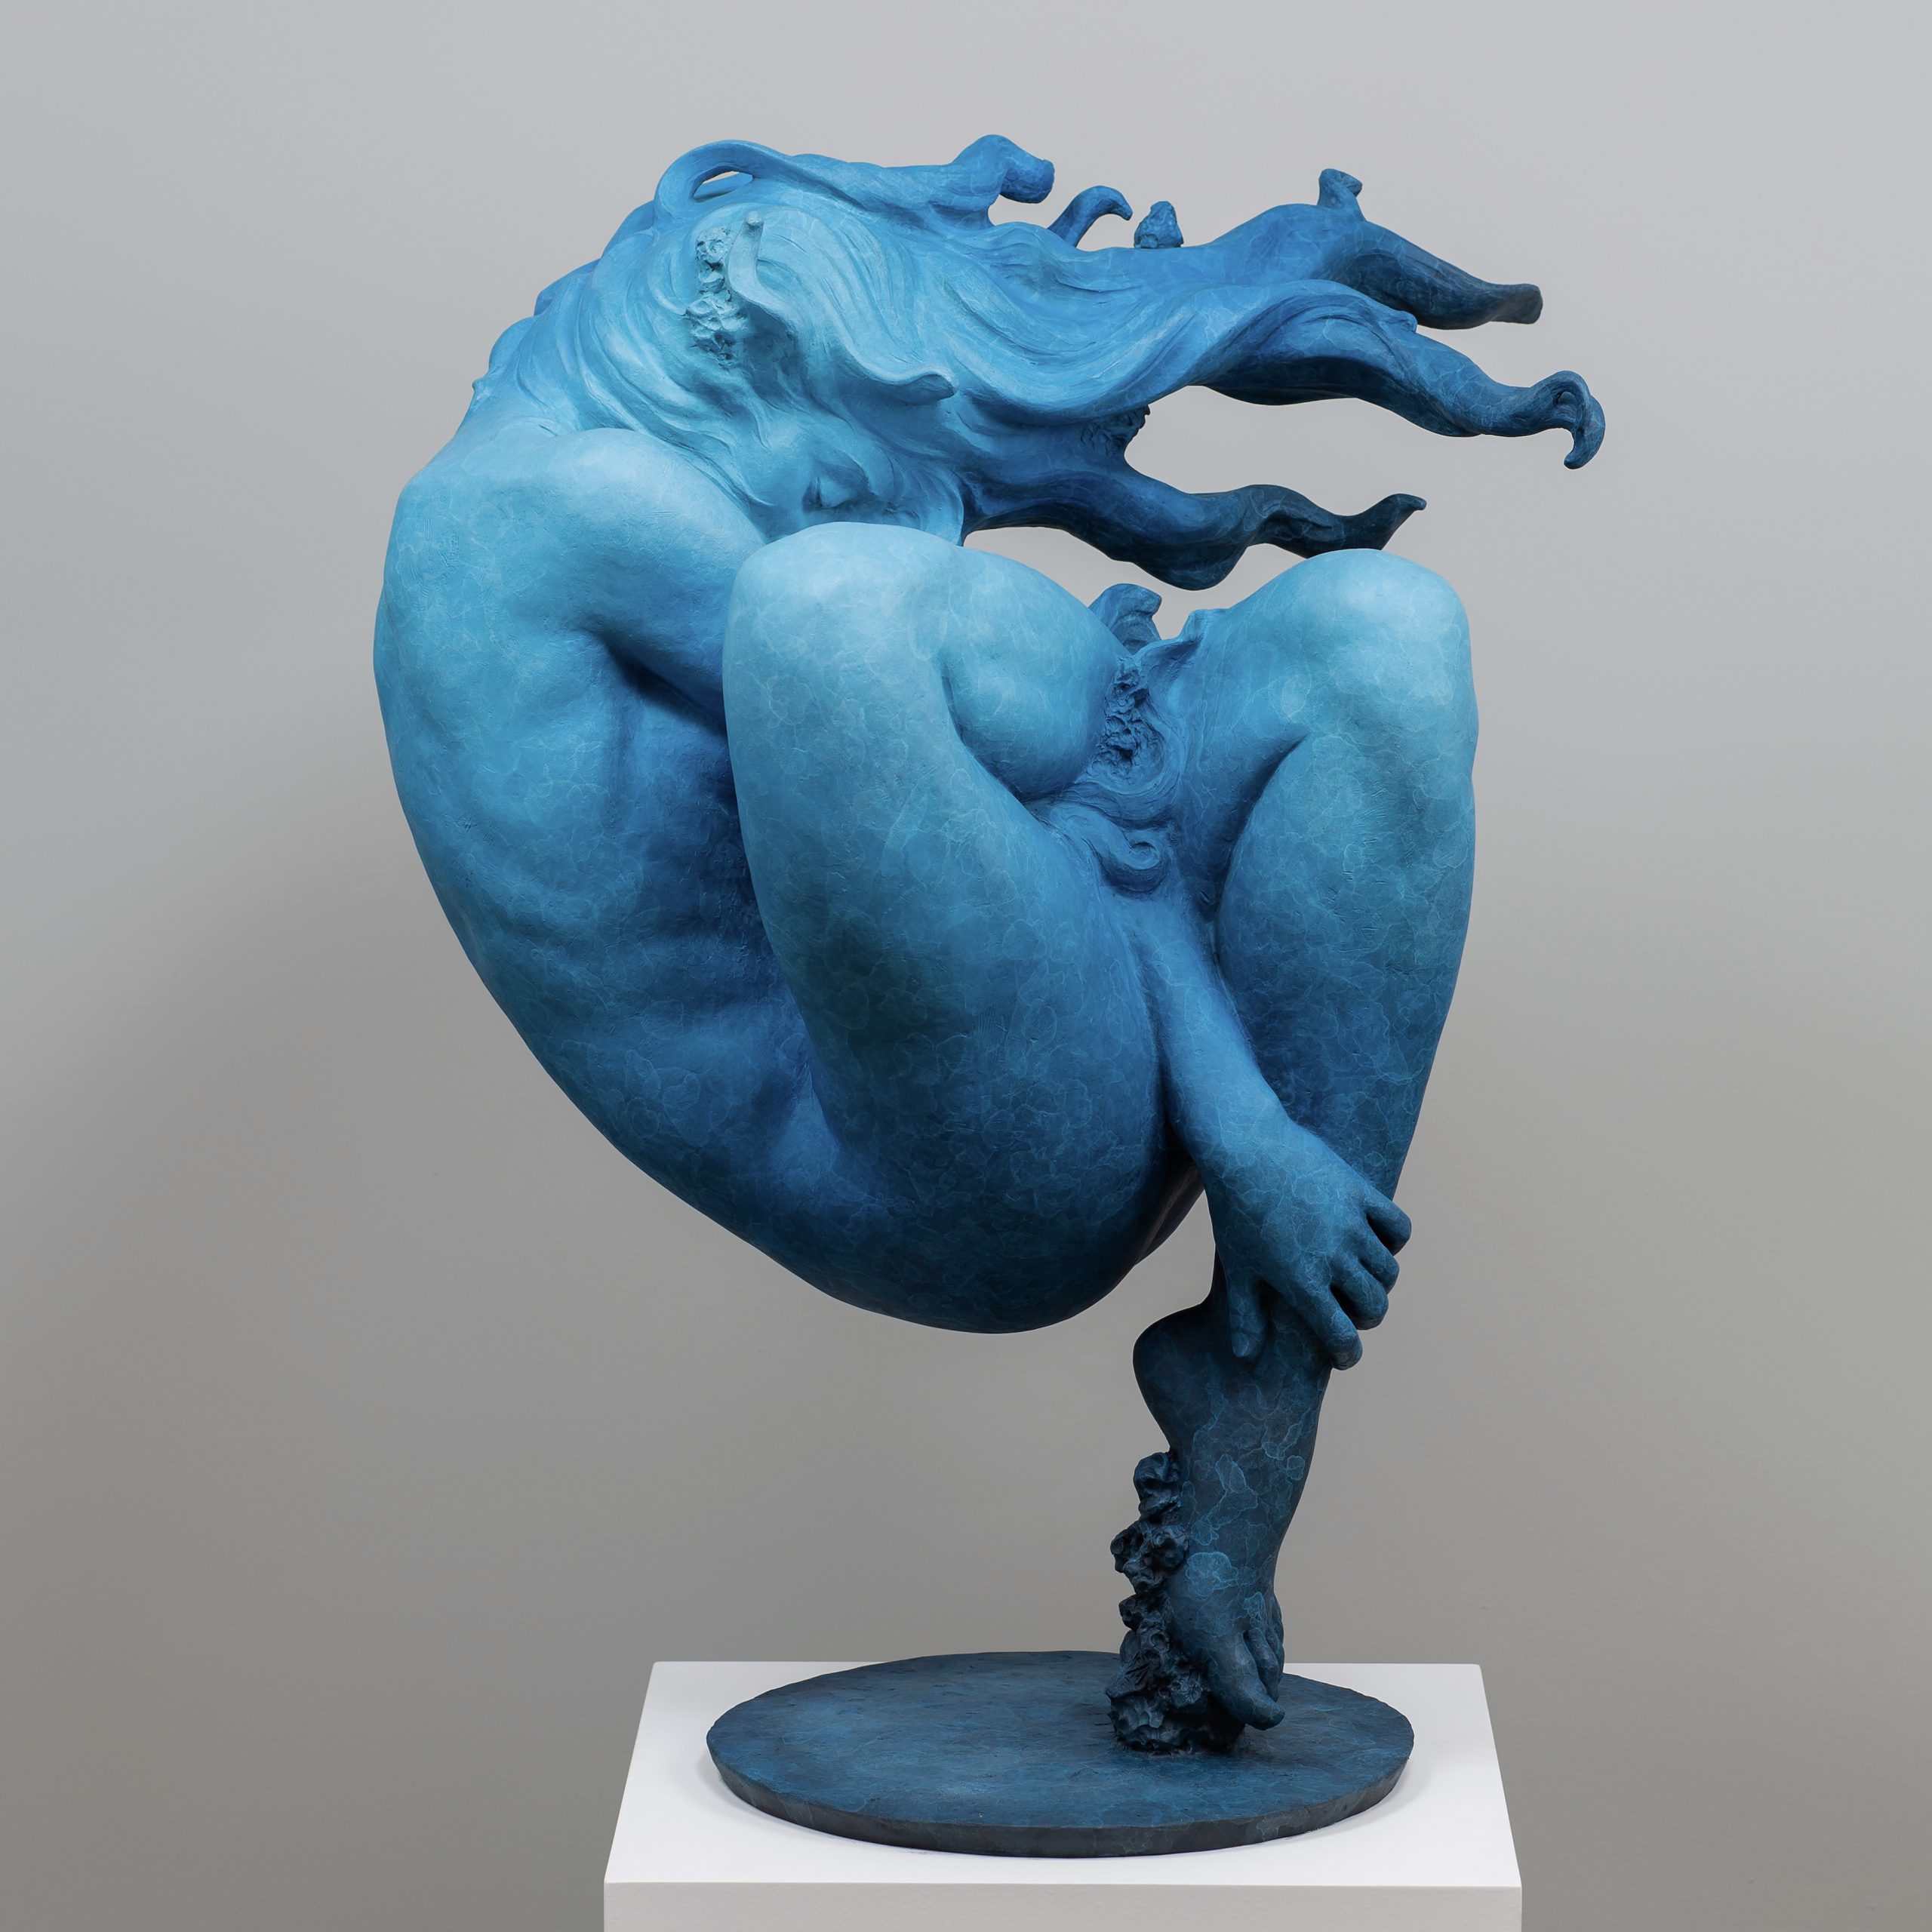 Coderch & Malavia Artiste<br />
Sculpture Bronze<br />
Kymo<br />
@ Marciano Contemporary